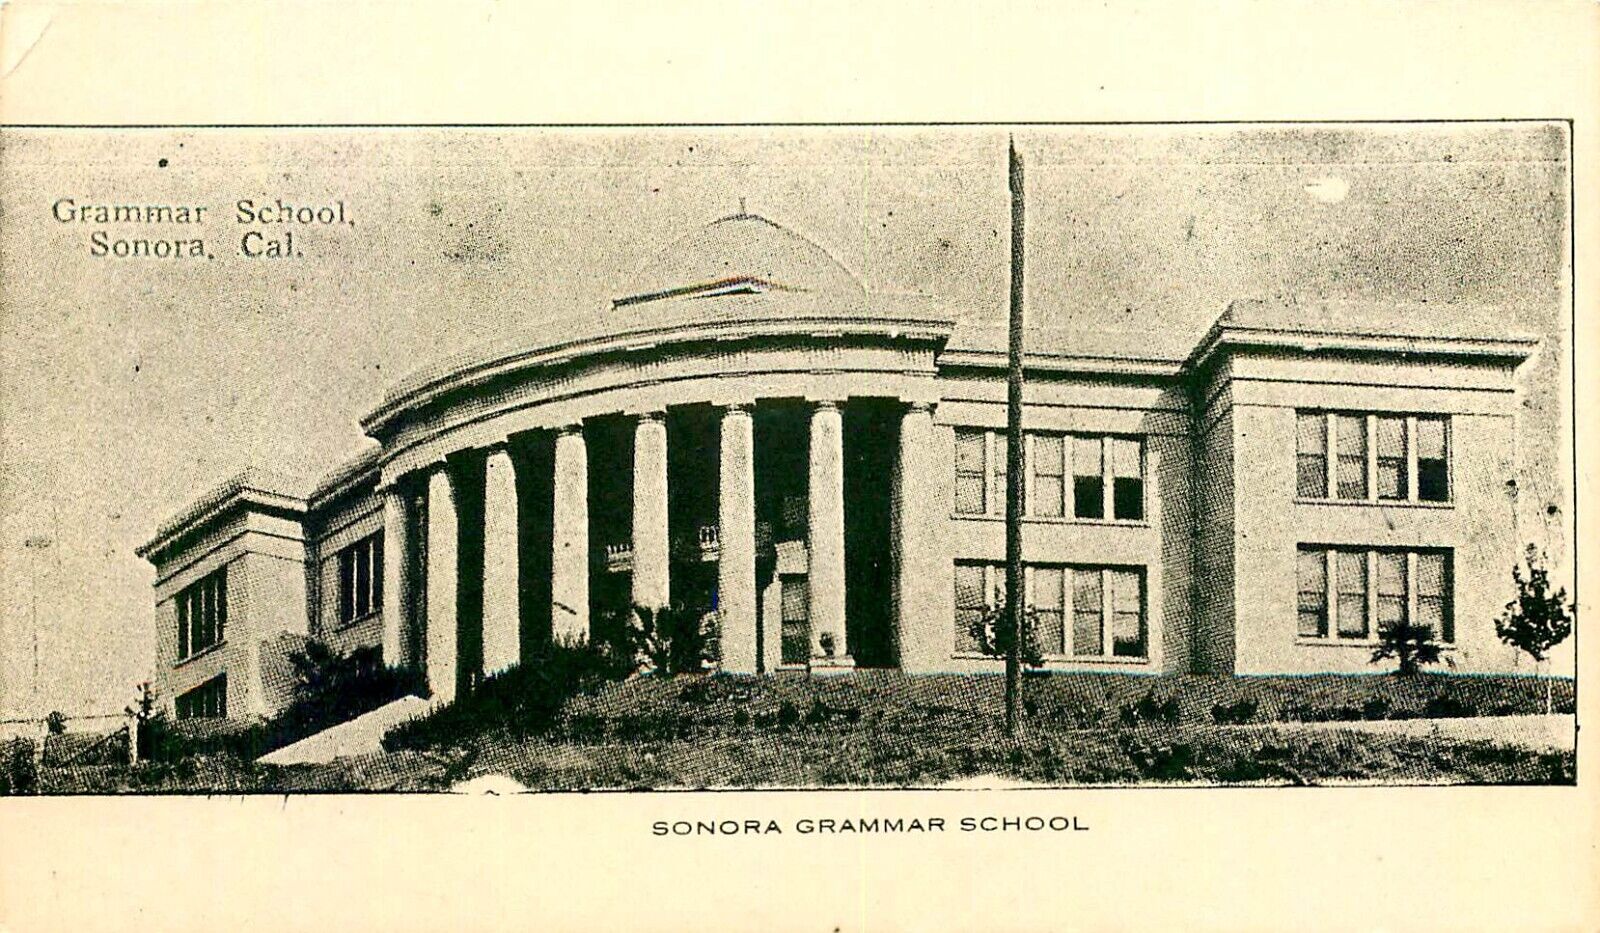 GRAMMAR SCHOOL, SONORA, CALIFORNIA, c 1905 VINTAGE POSTCARD (SV 624)